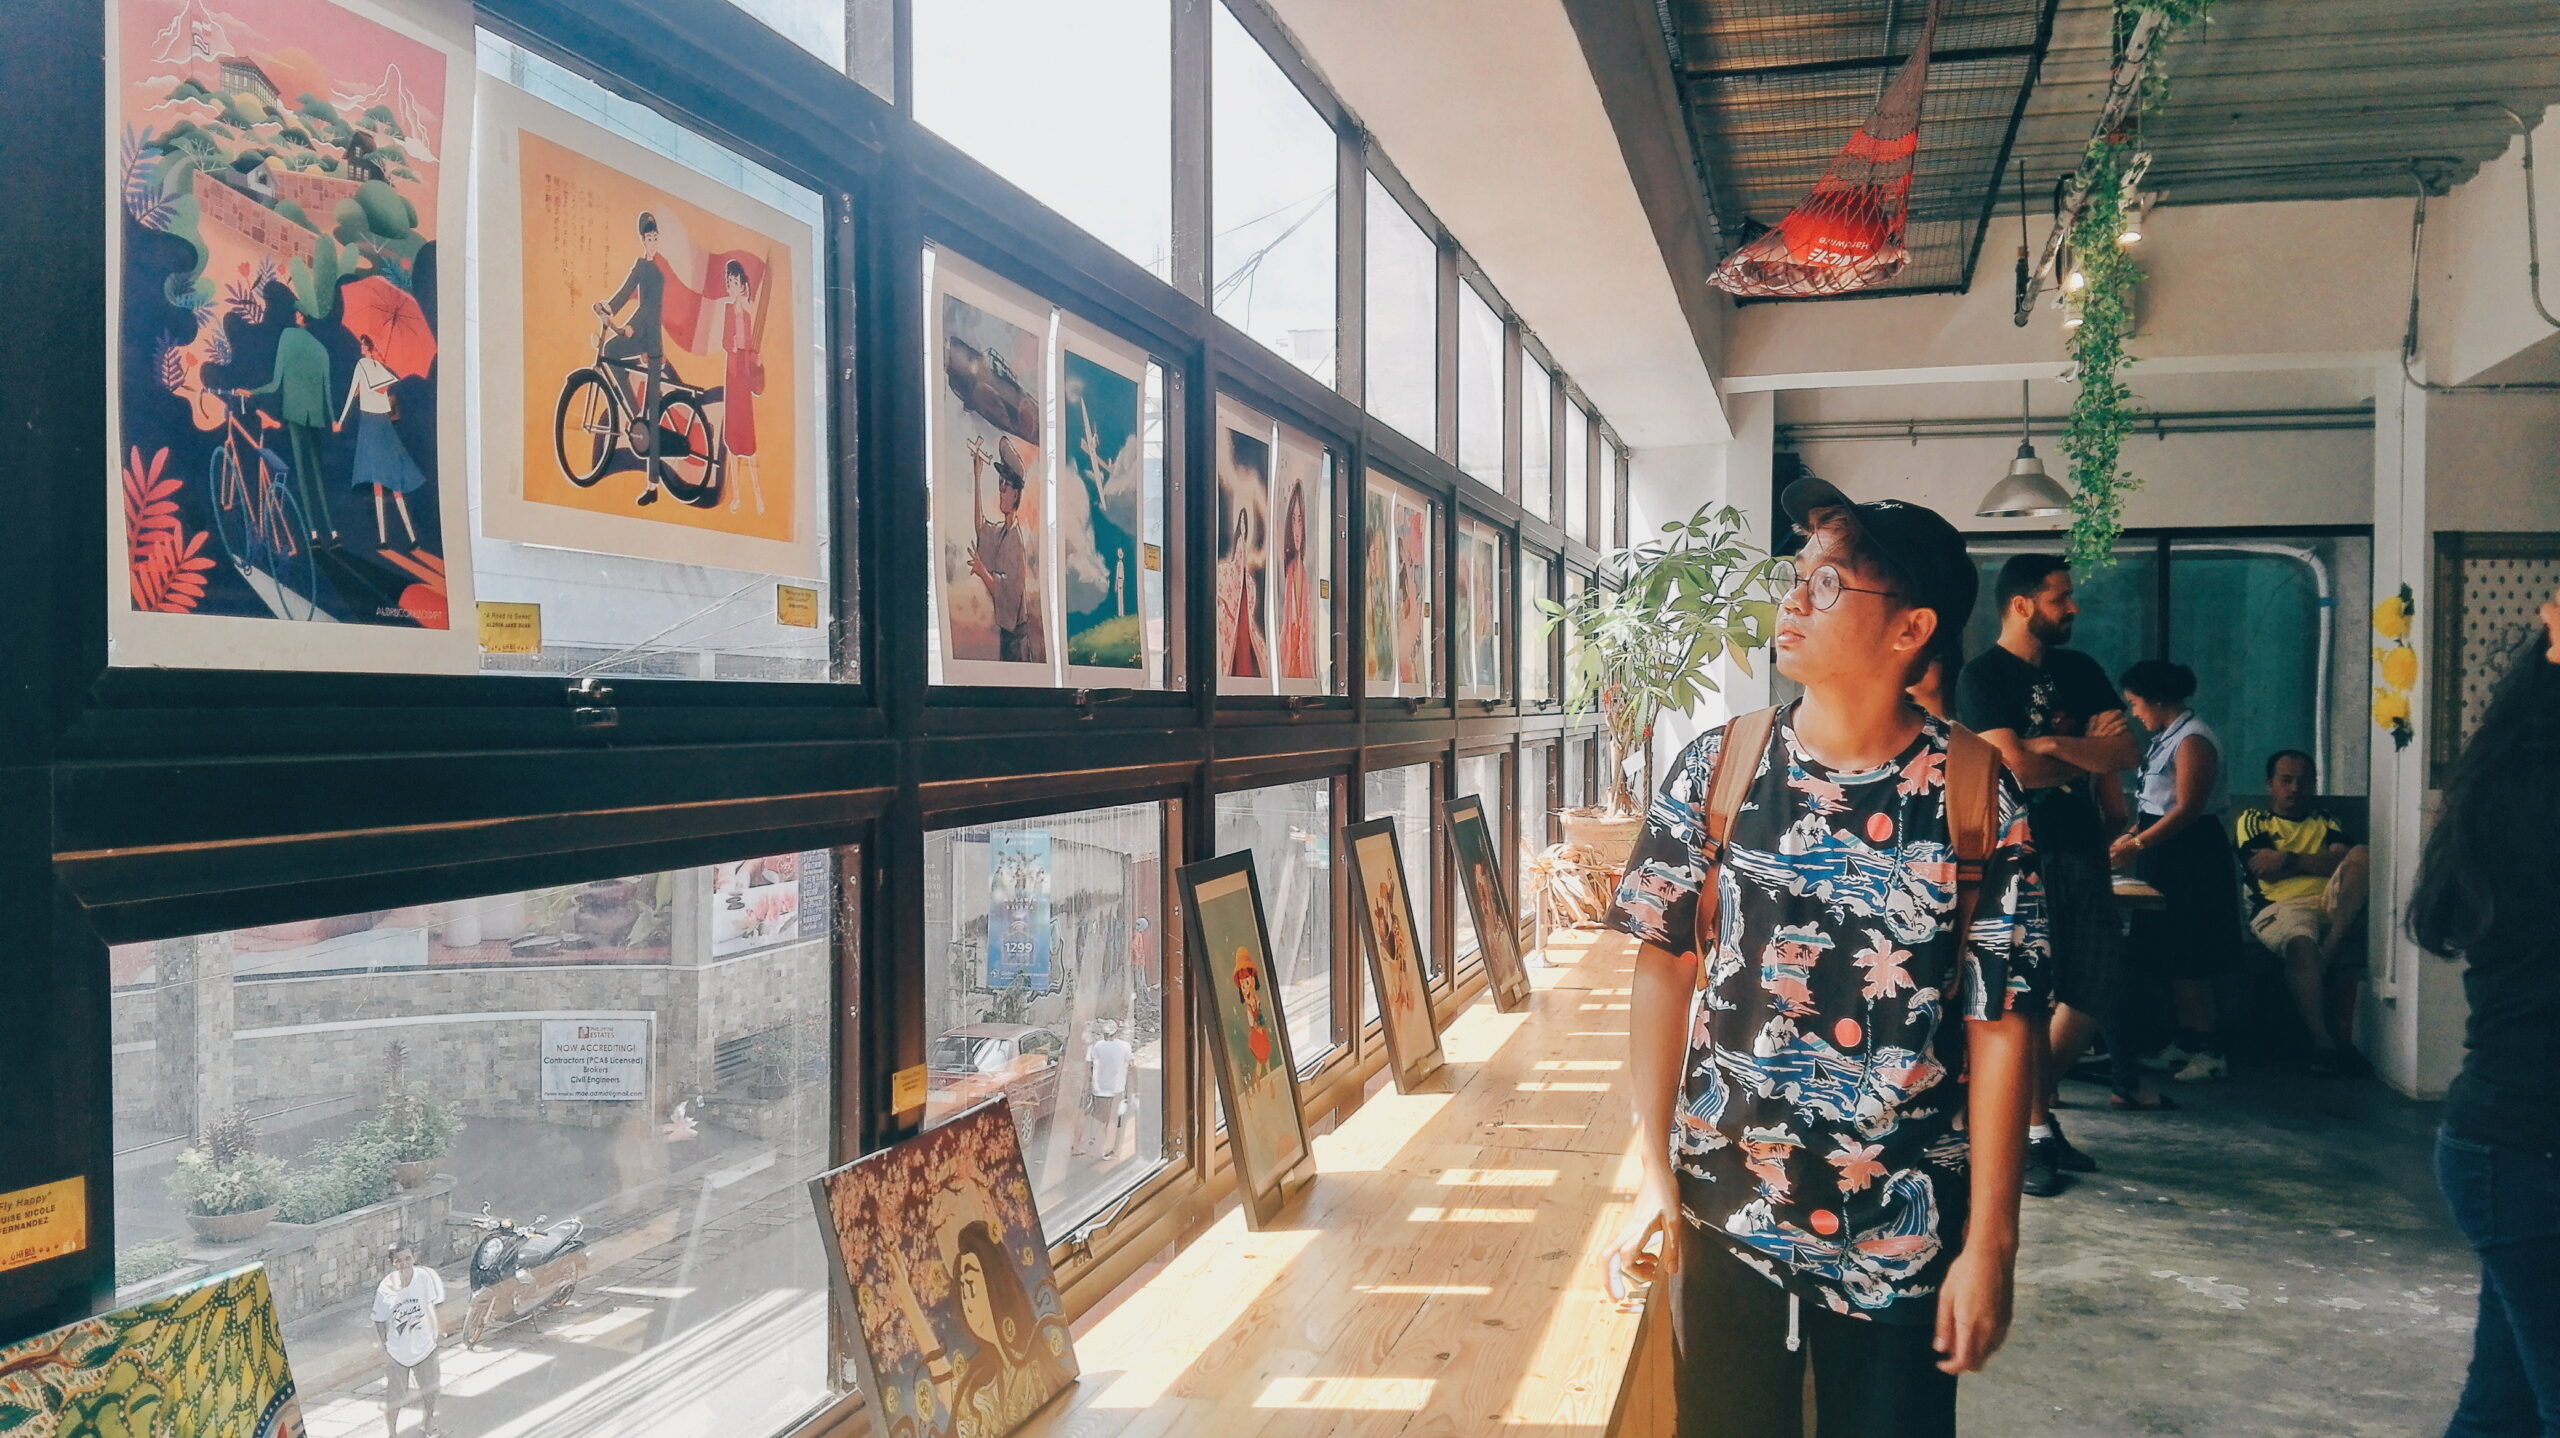 The Ghibli Art Tribute Exhibit in Cebu